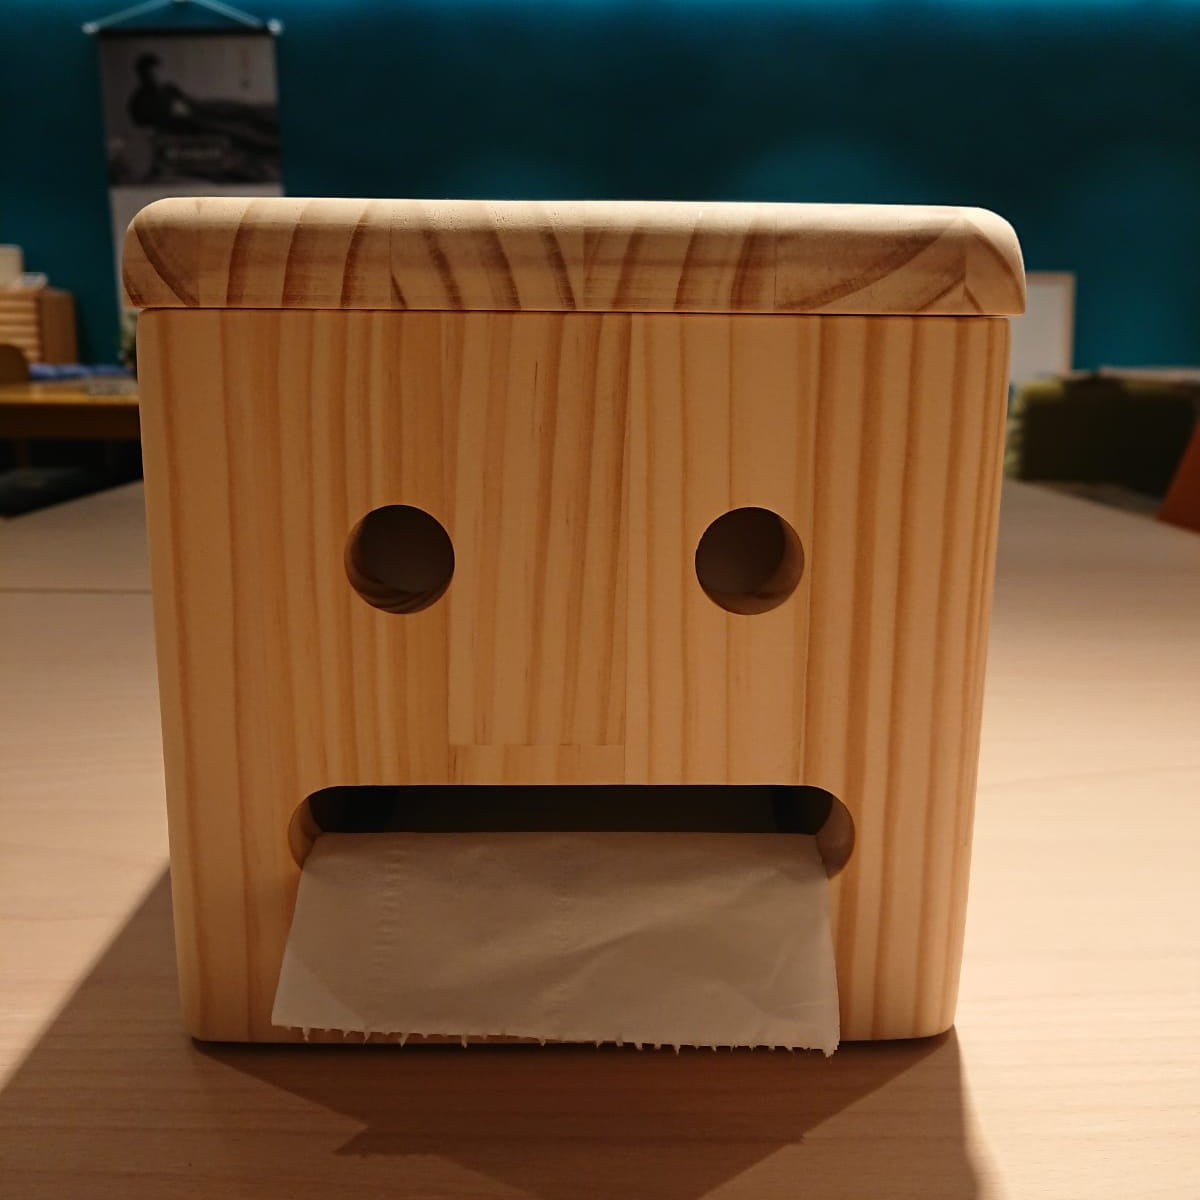 Emoji Tissue Box